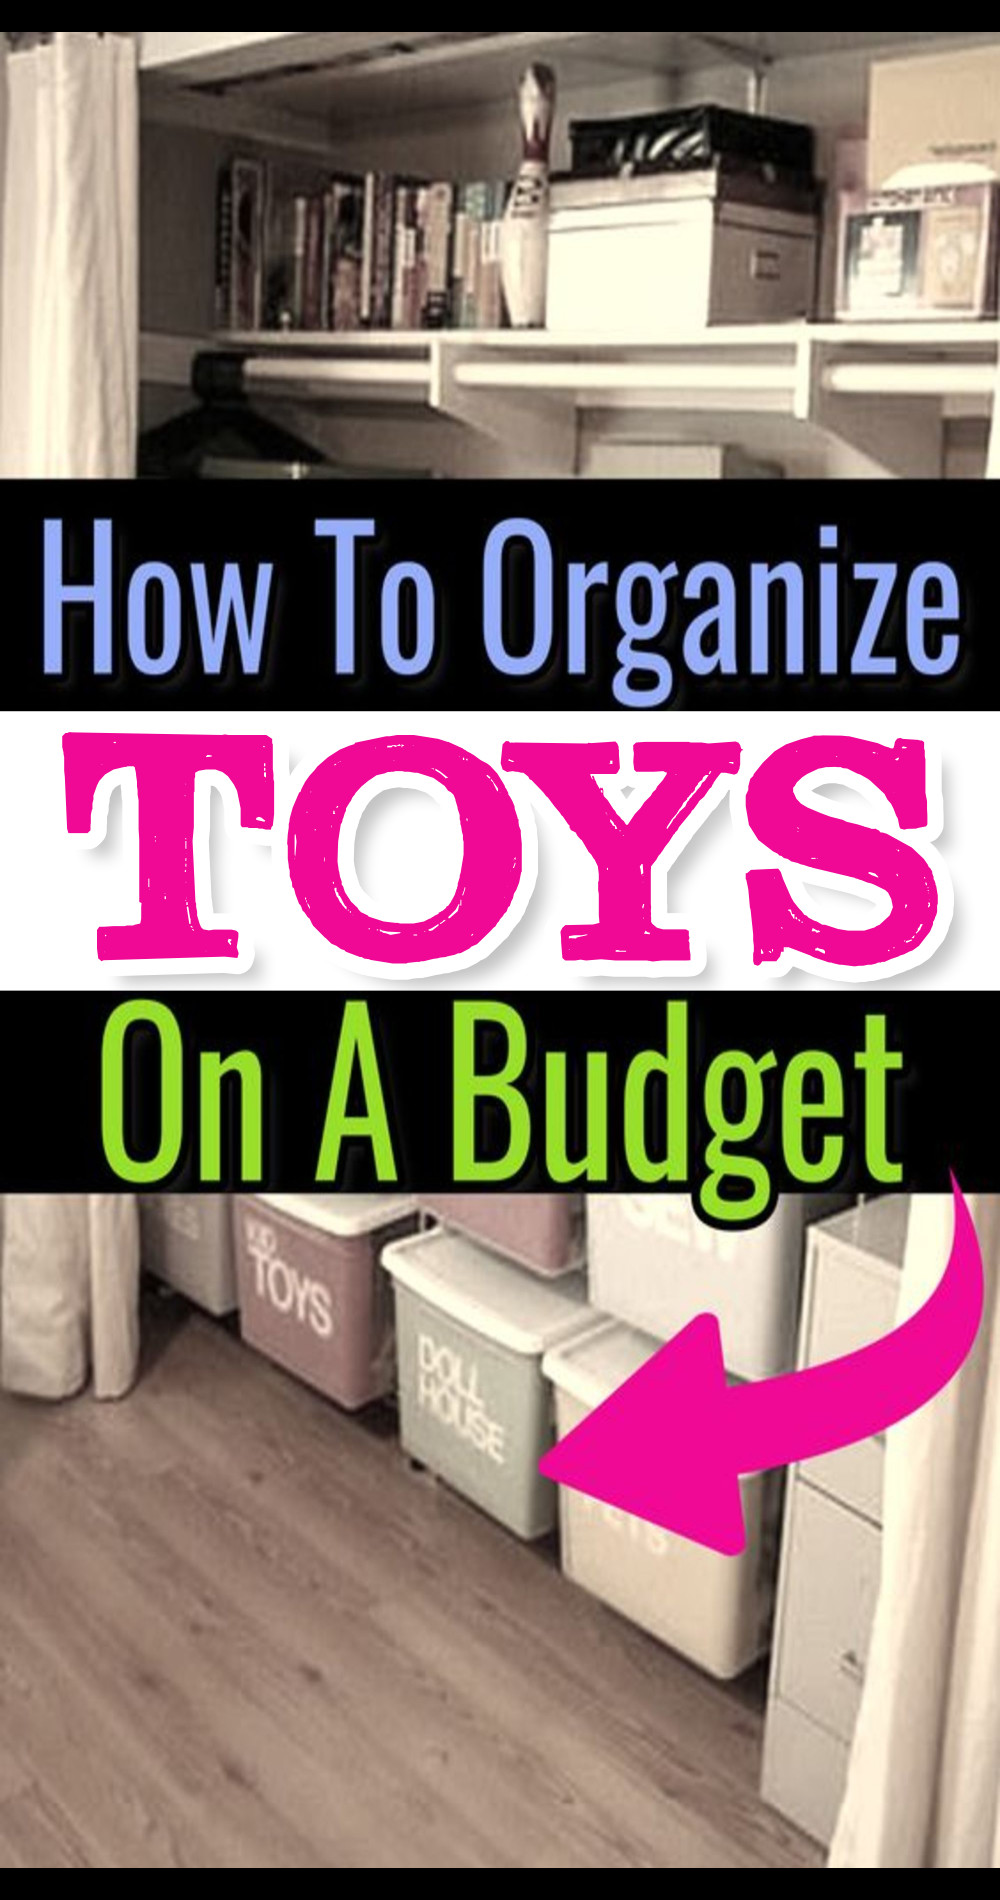 Toy organization ideas to get organized with no storage space